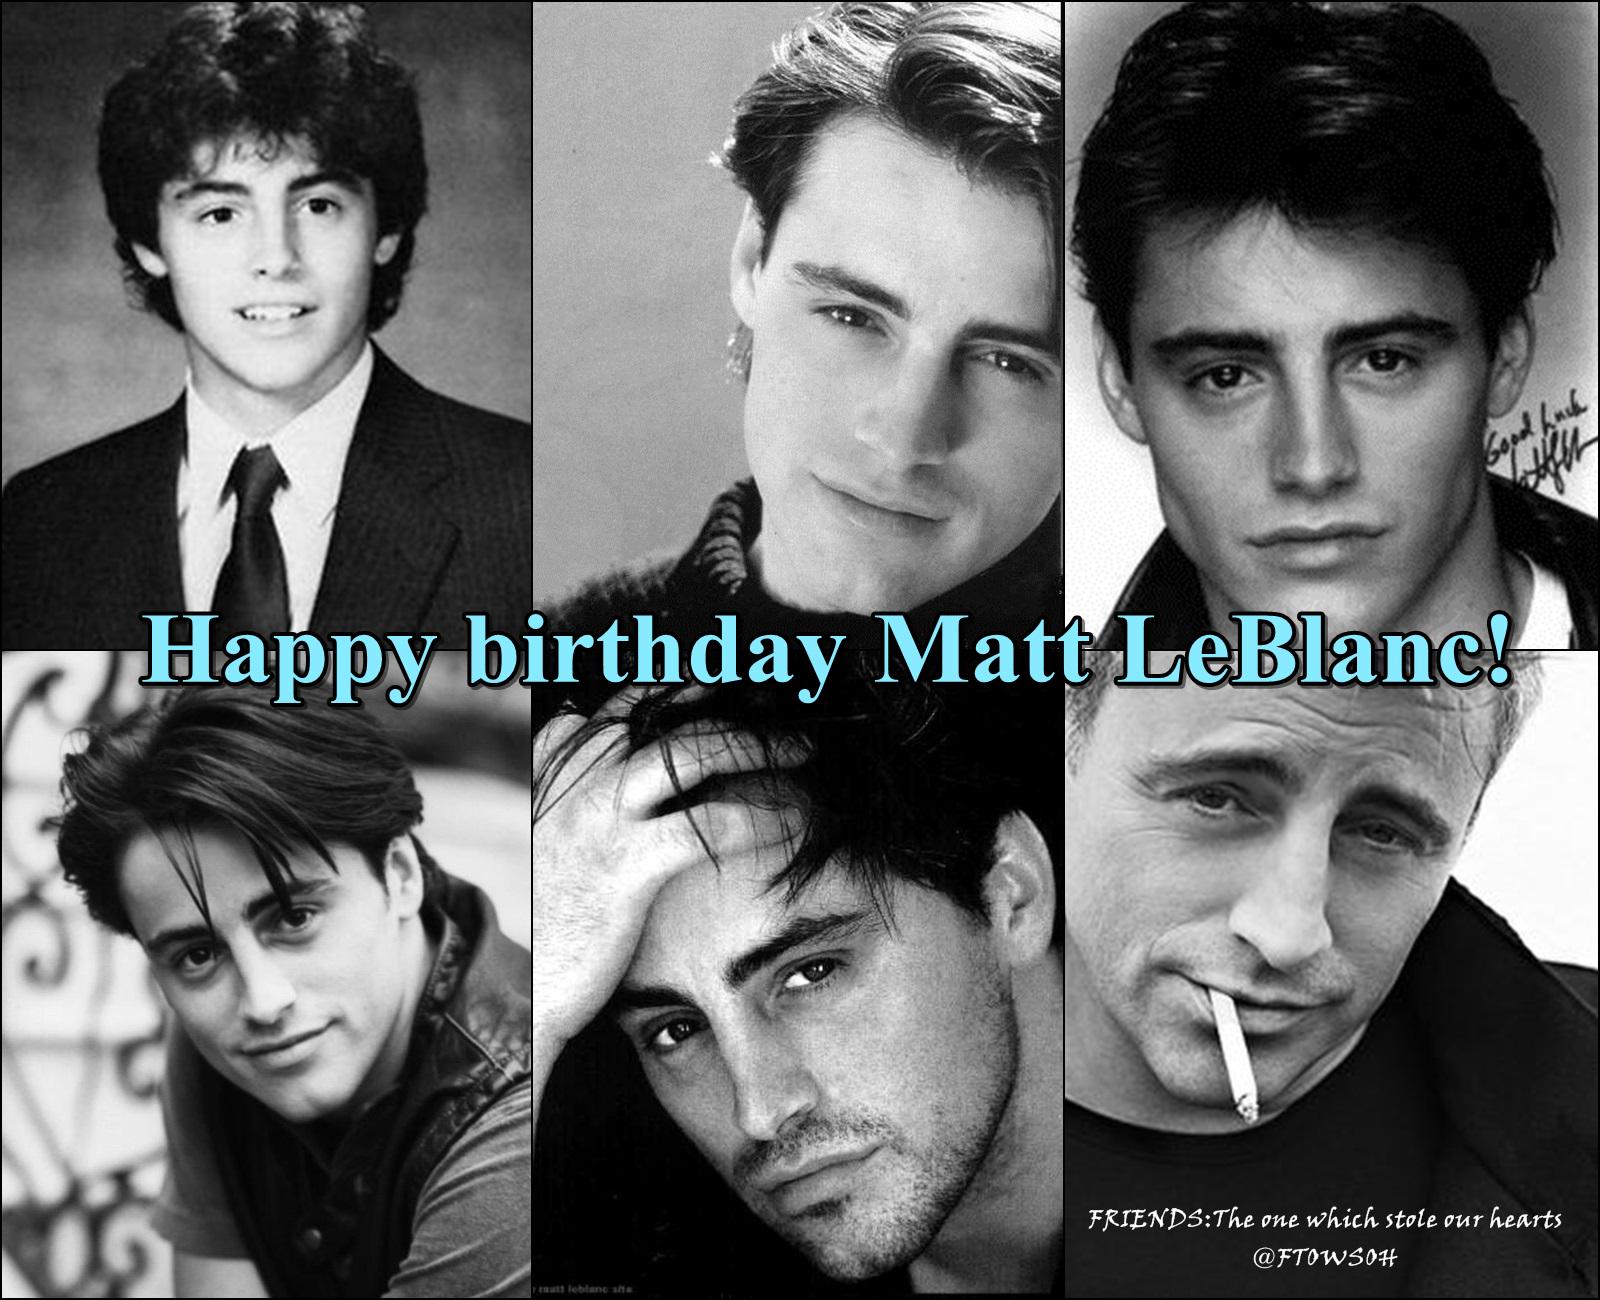 Let\s wish a very happy birthday to Matt LeBlanc aka our Joey :) 